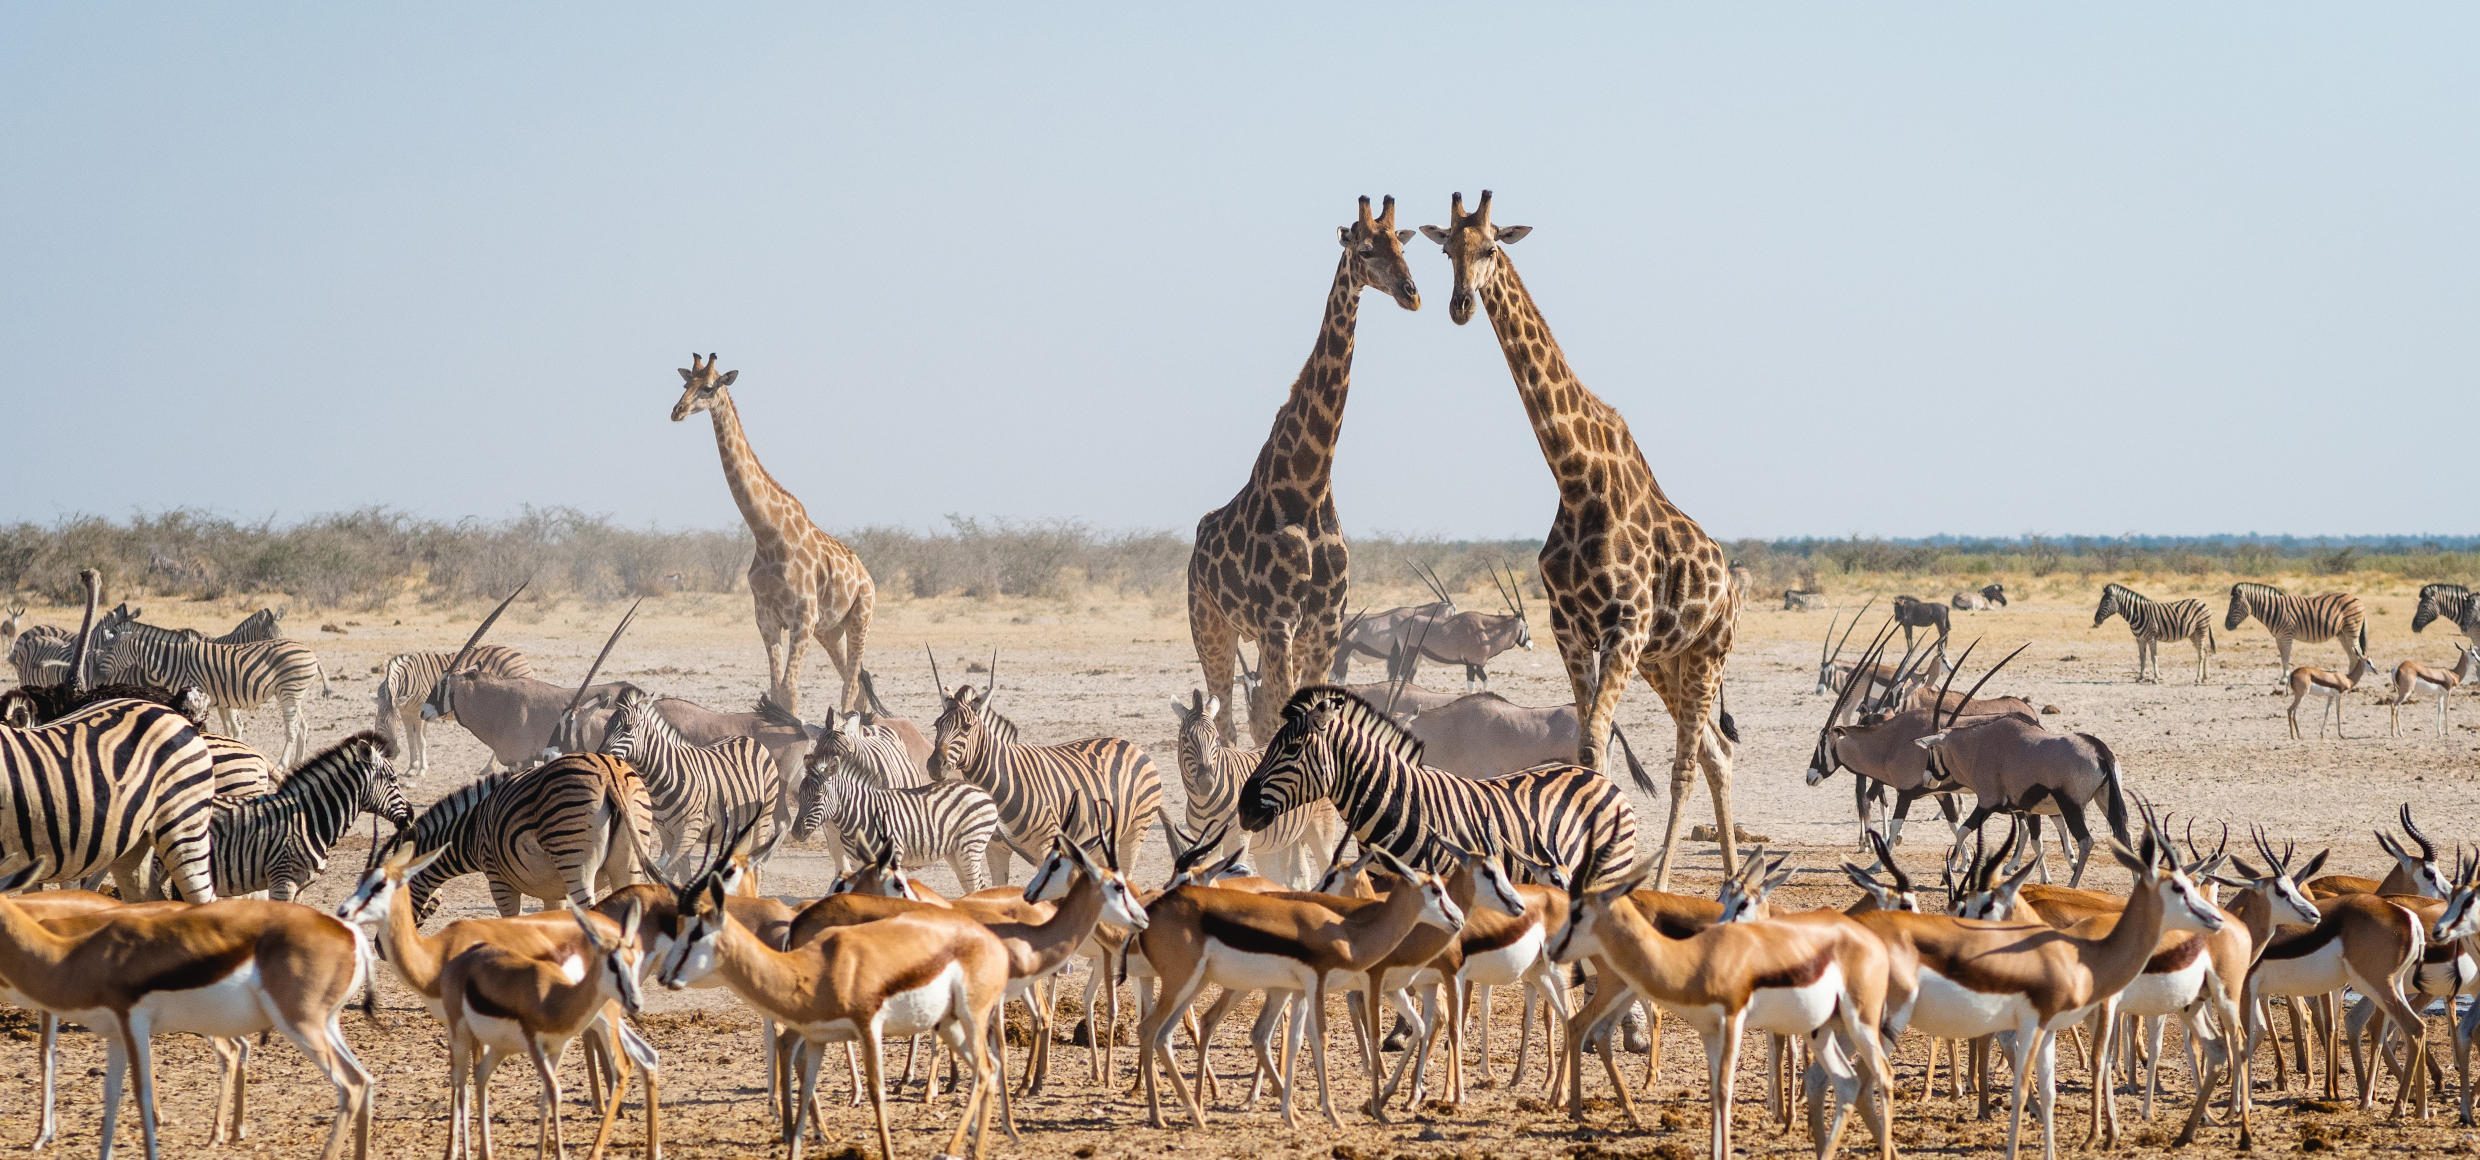 620_Slider_Tiergruppe-Zebra-Giraffen-Wüste-Namibia